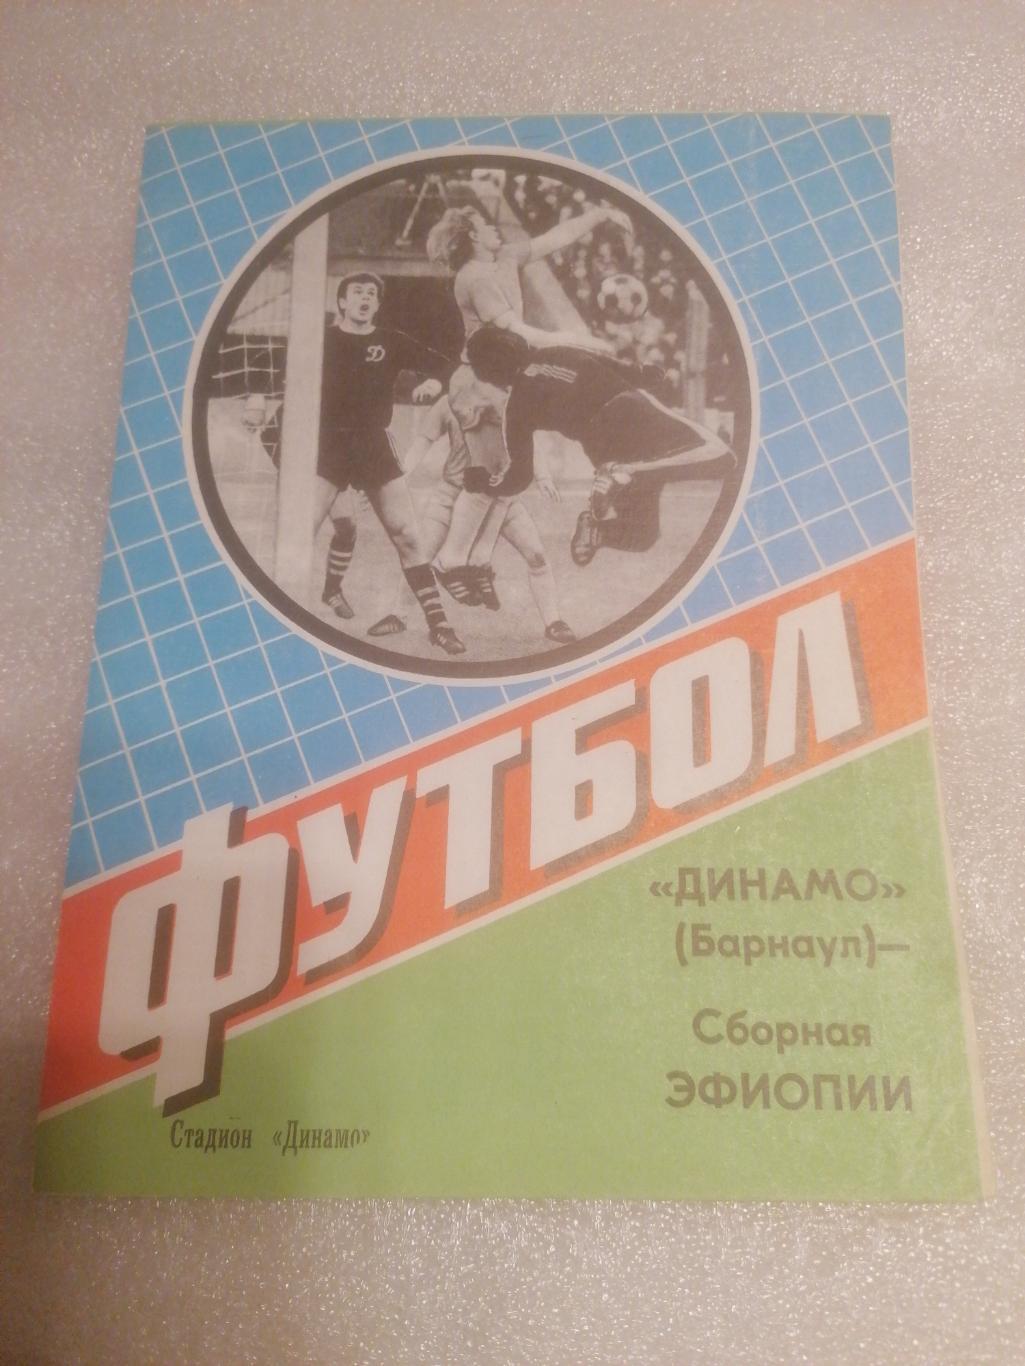 Динамо Барнаул - Сборная Эфиопии 26 августа 1984 МТМ